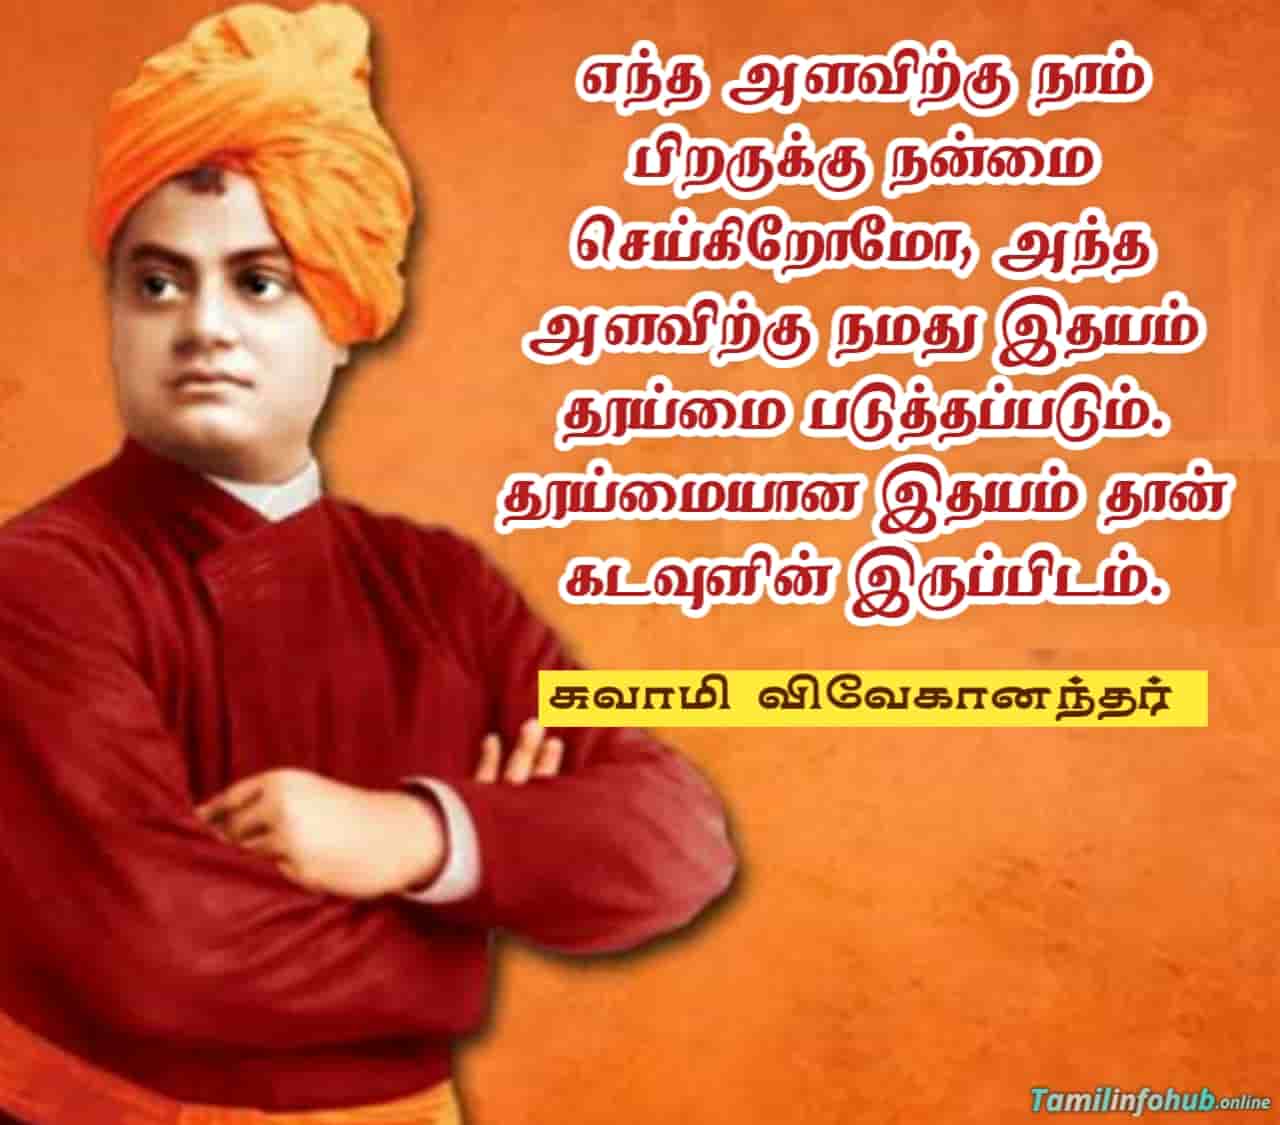 Vivekananda Tamil quotes images